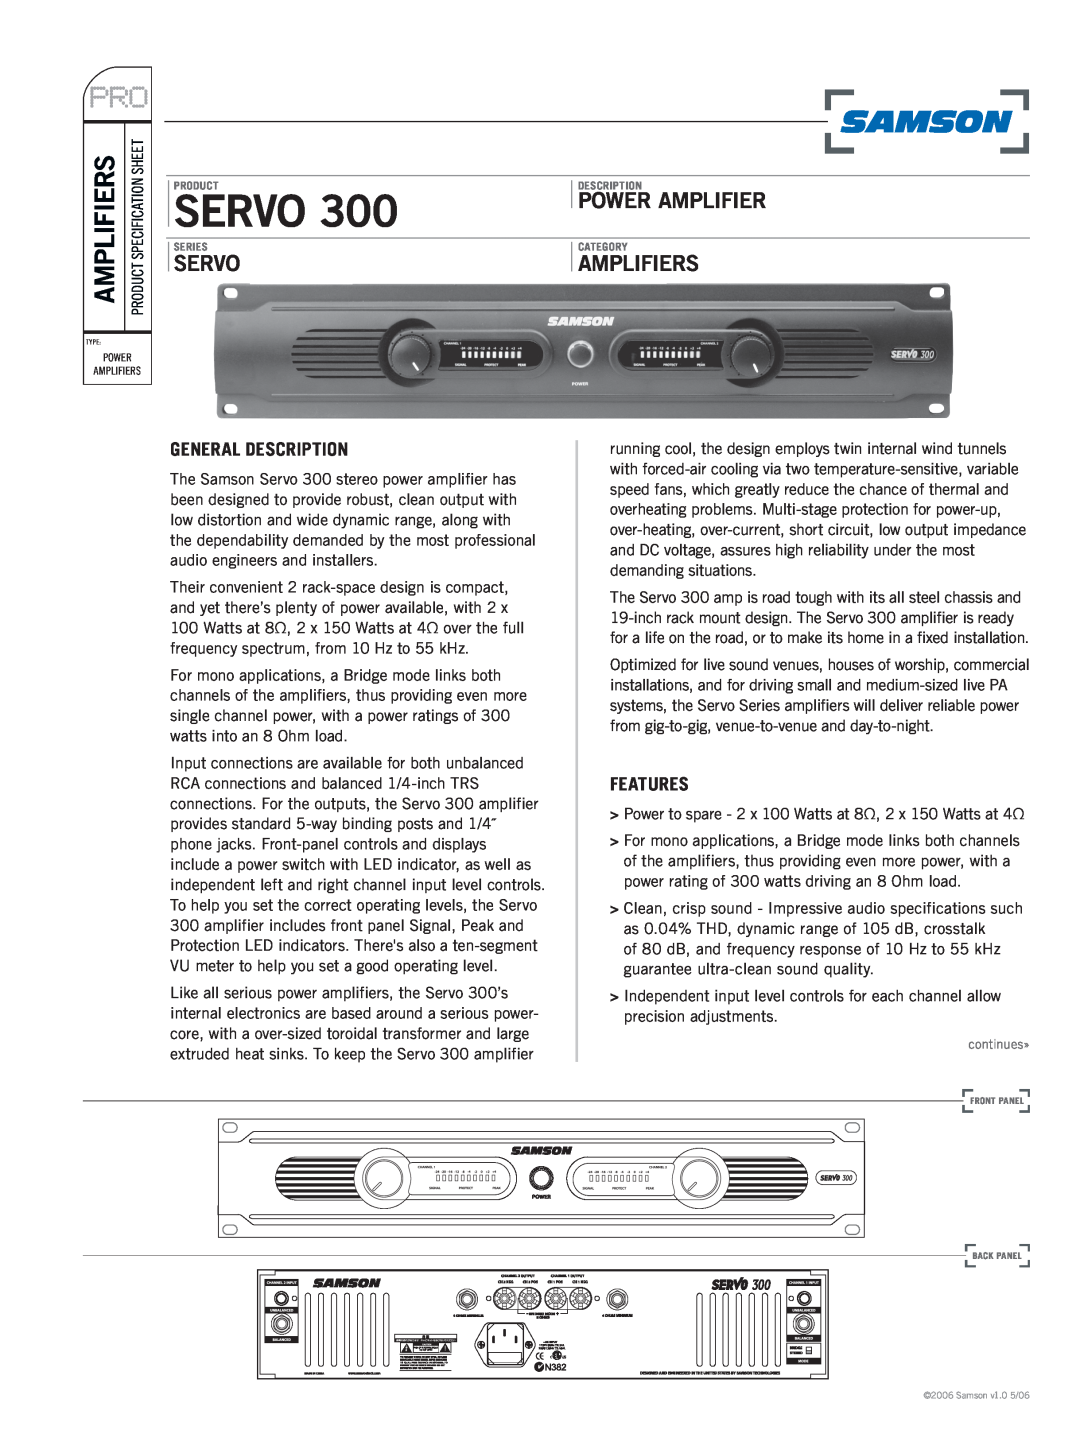 Samson 300 specifications General Description, Features, Servo, Amplifiers, Power Amplifier 